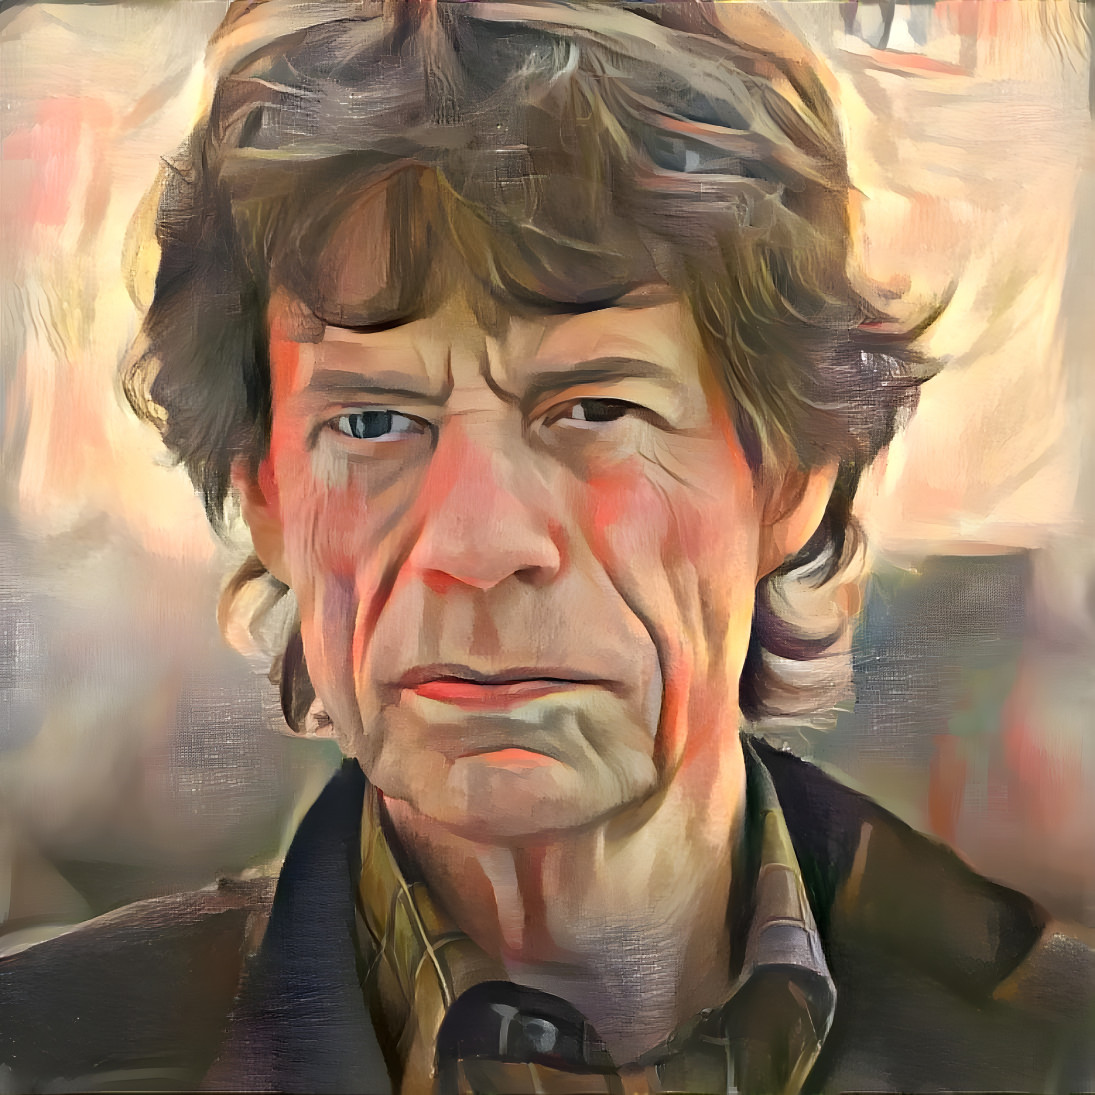 Portrait of Mick Jagger